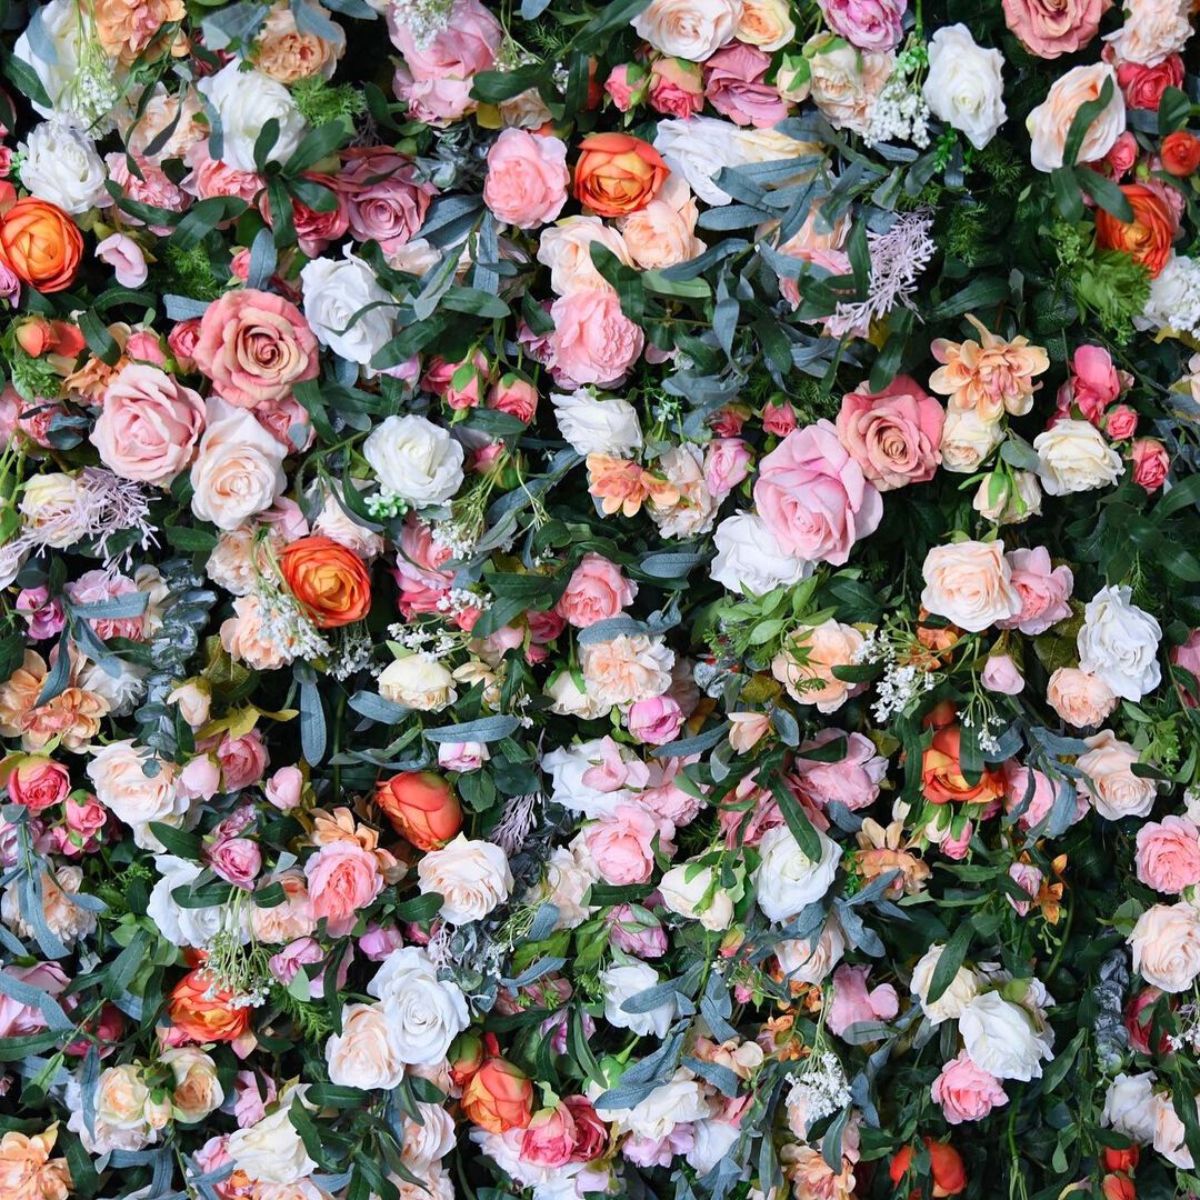 Flower walls for wedding decor